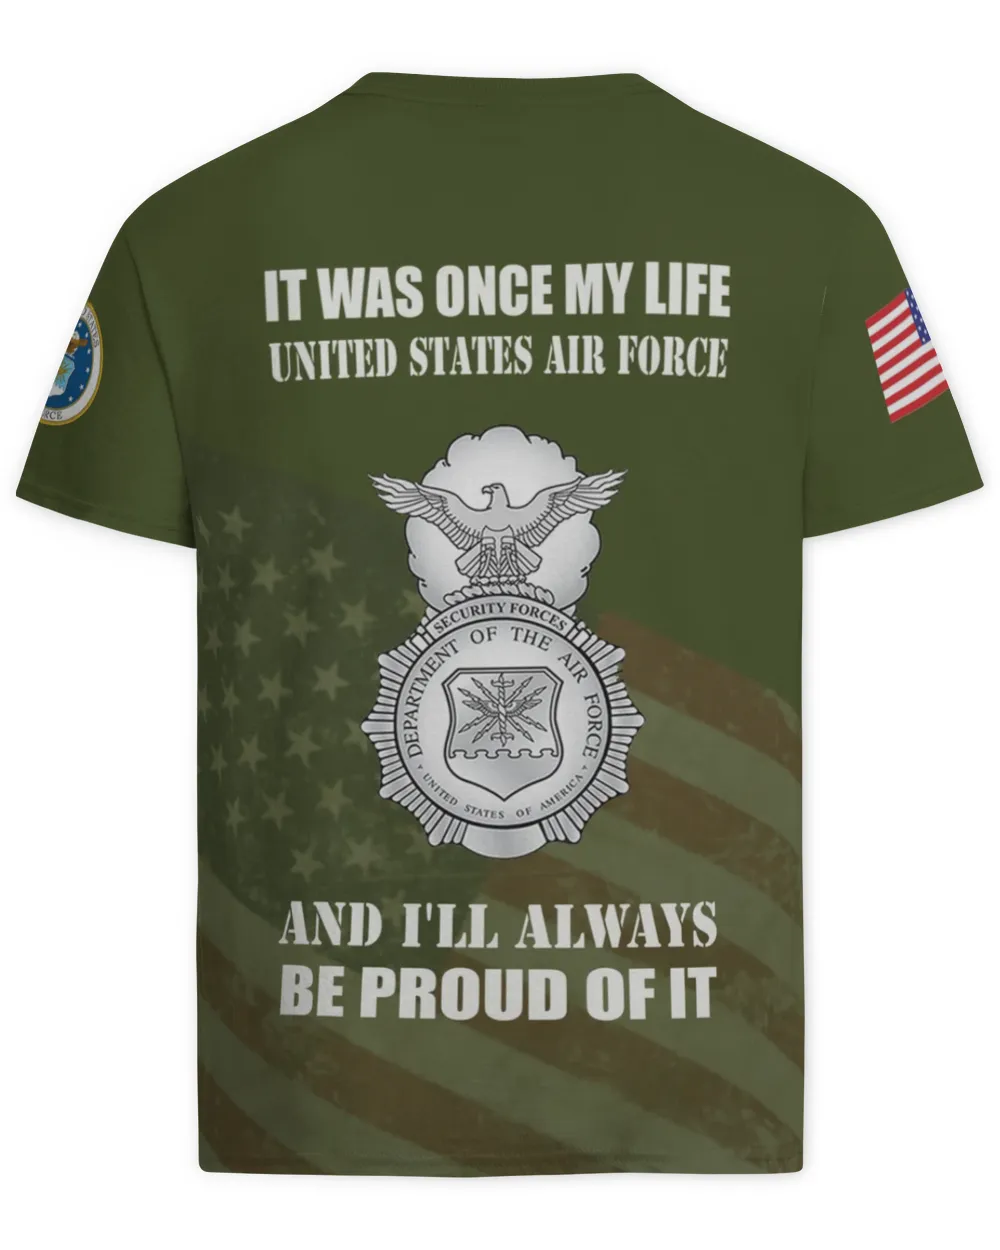 3415th Security Police Squadron Hawaiian Shirt